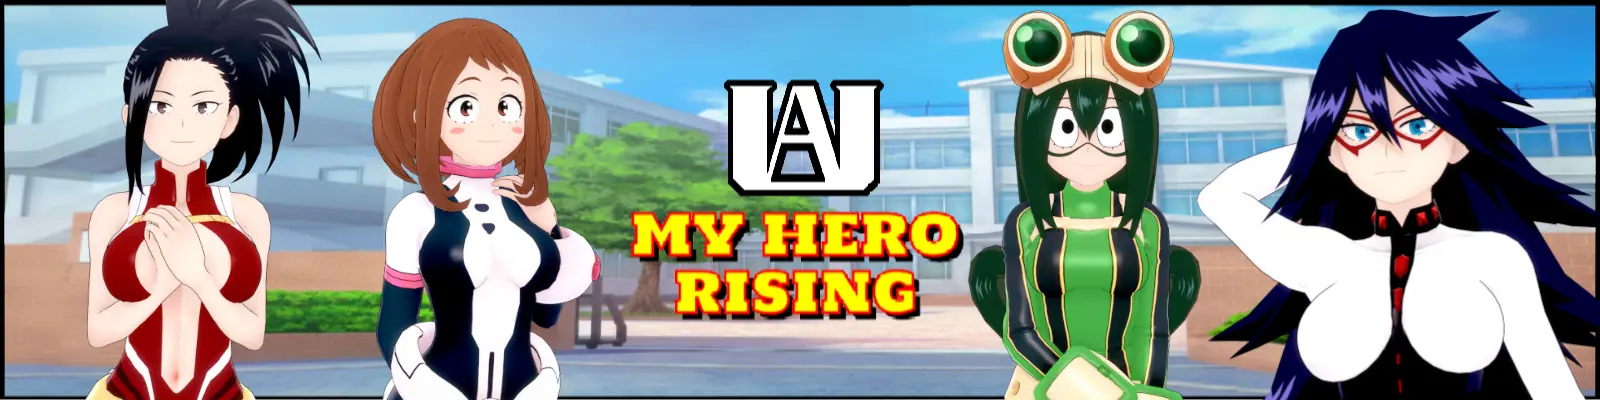 My Hero Rising [v0.01] main image